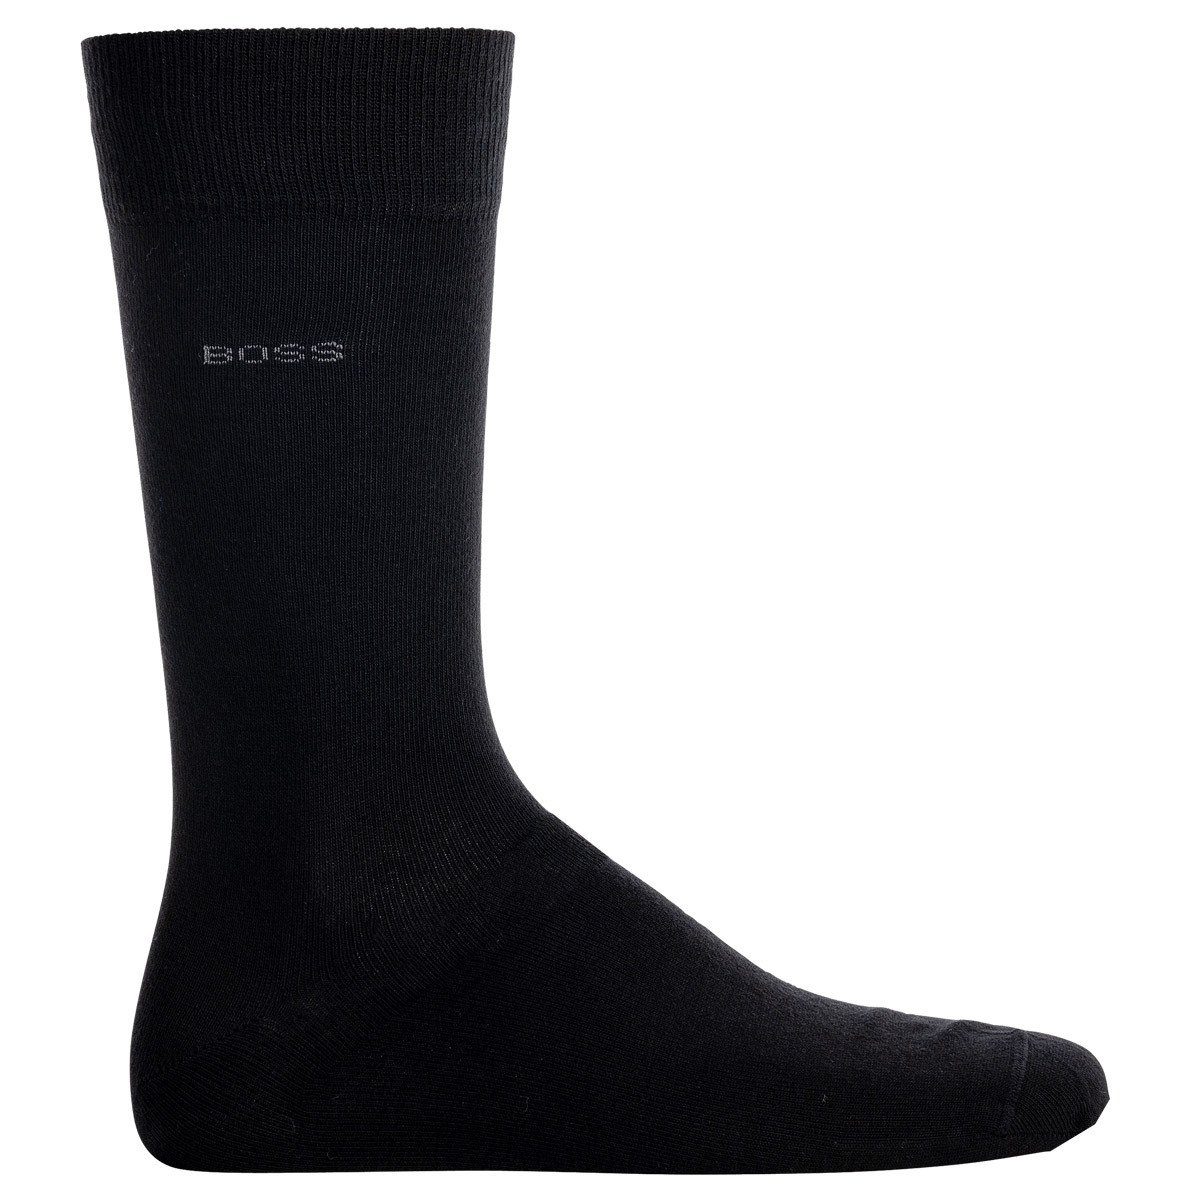 Wäsche/Bademode Socken BOSS Kurzsocken Herren Socken, 1 Paar - Marc RS Uni CC,